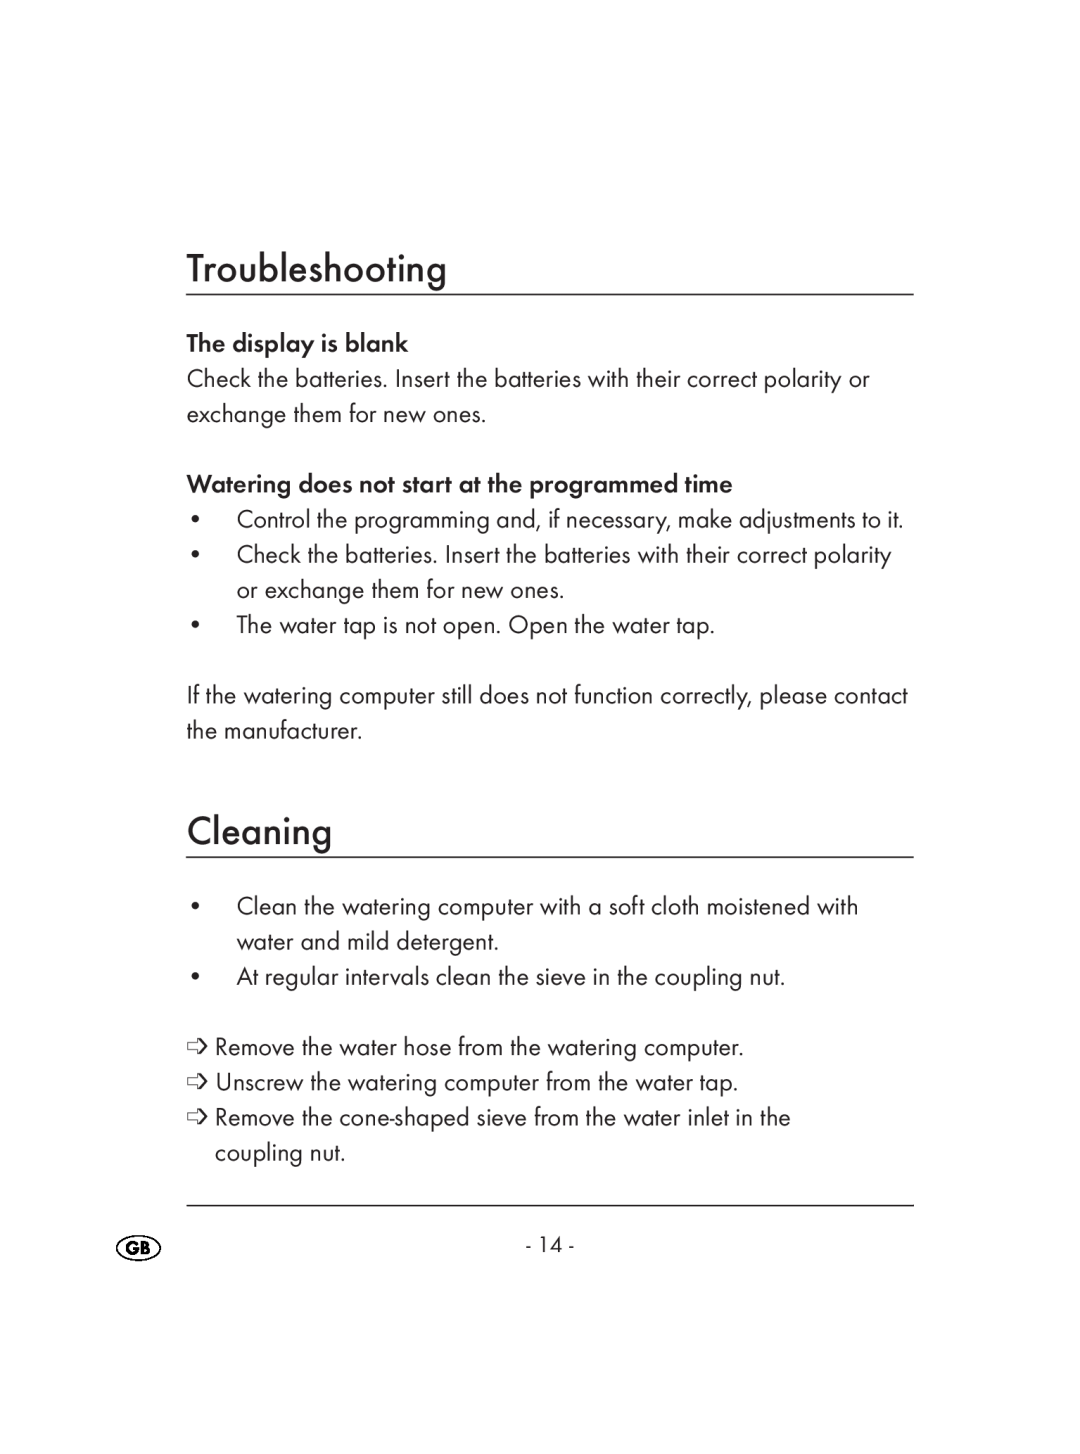 Kompernass KH 4083 manual Troubleshooting, Cleaning 